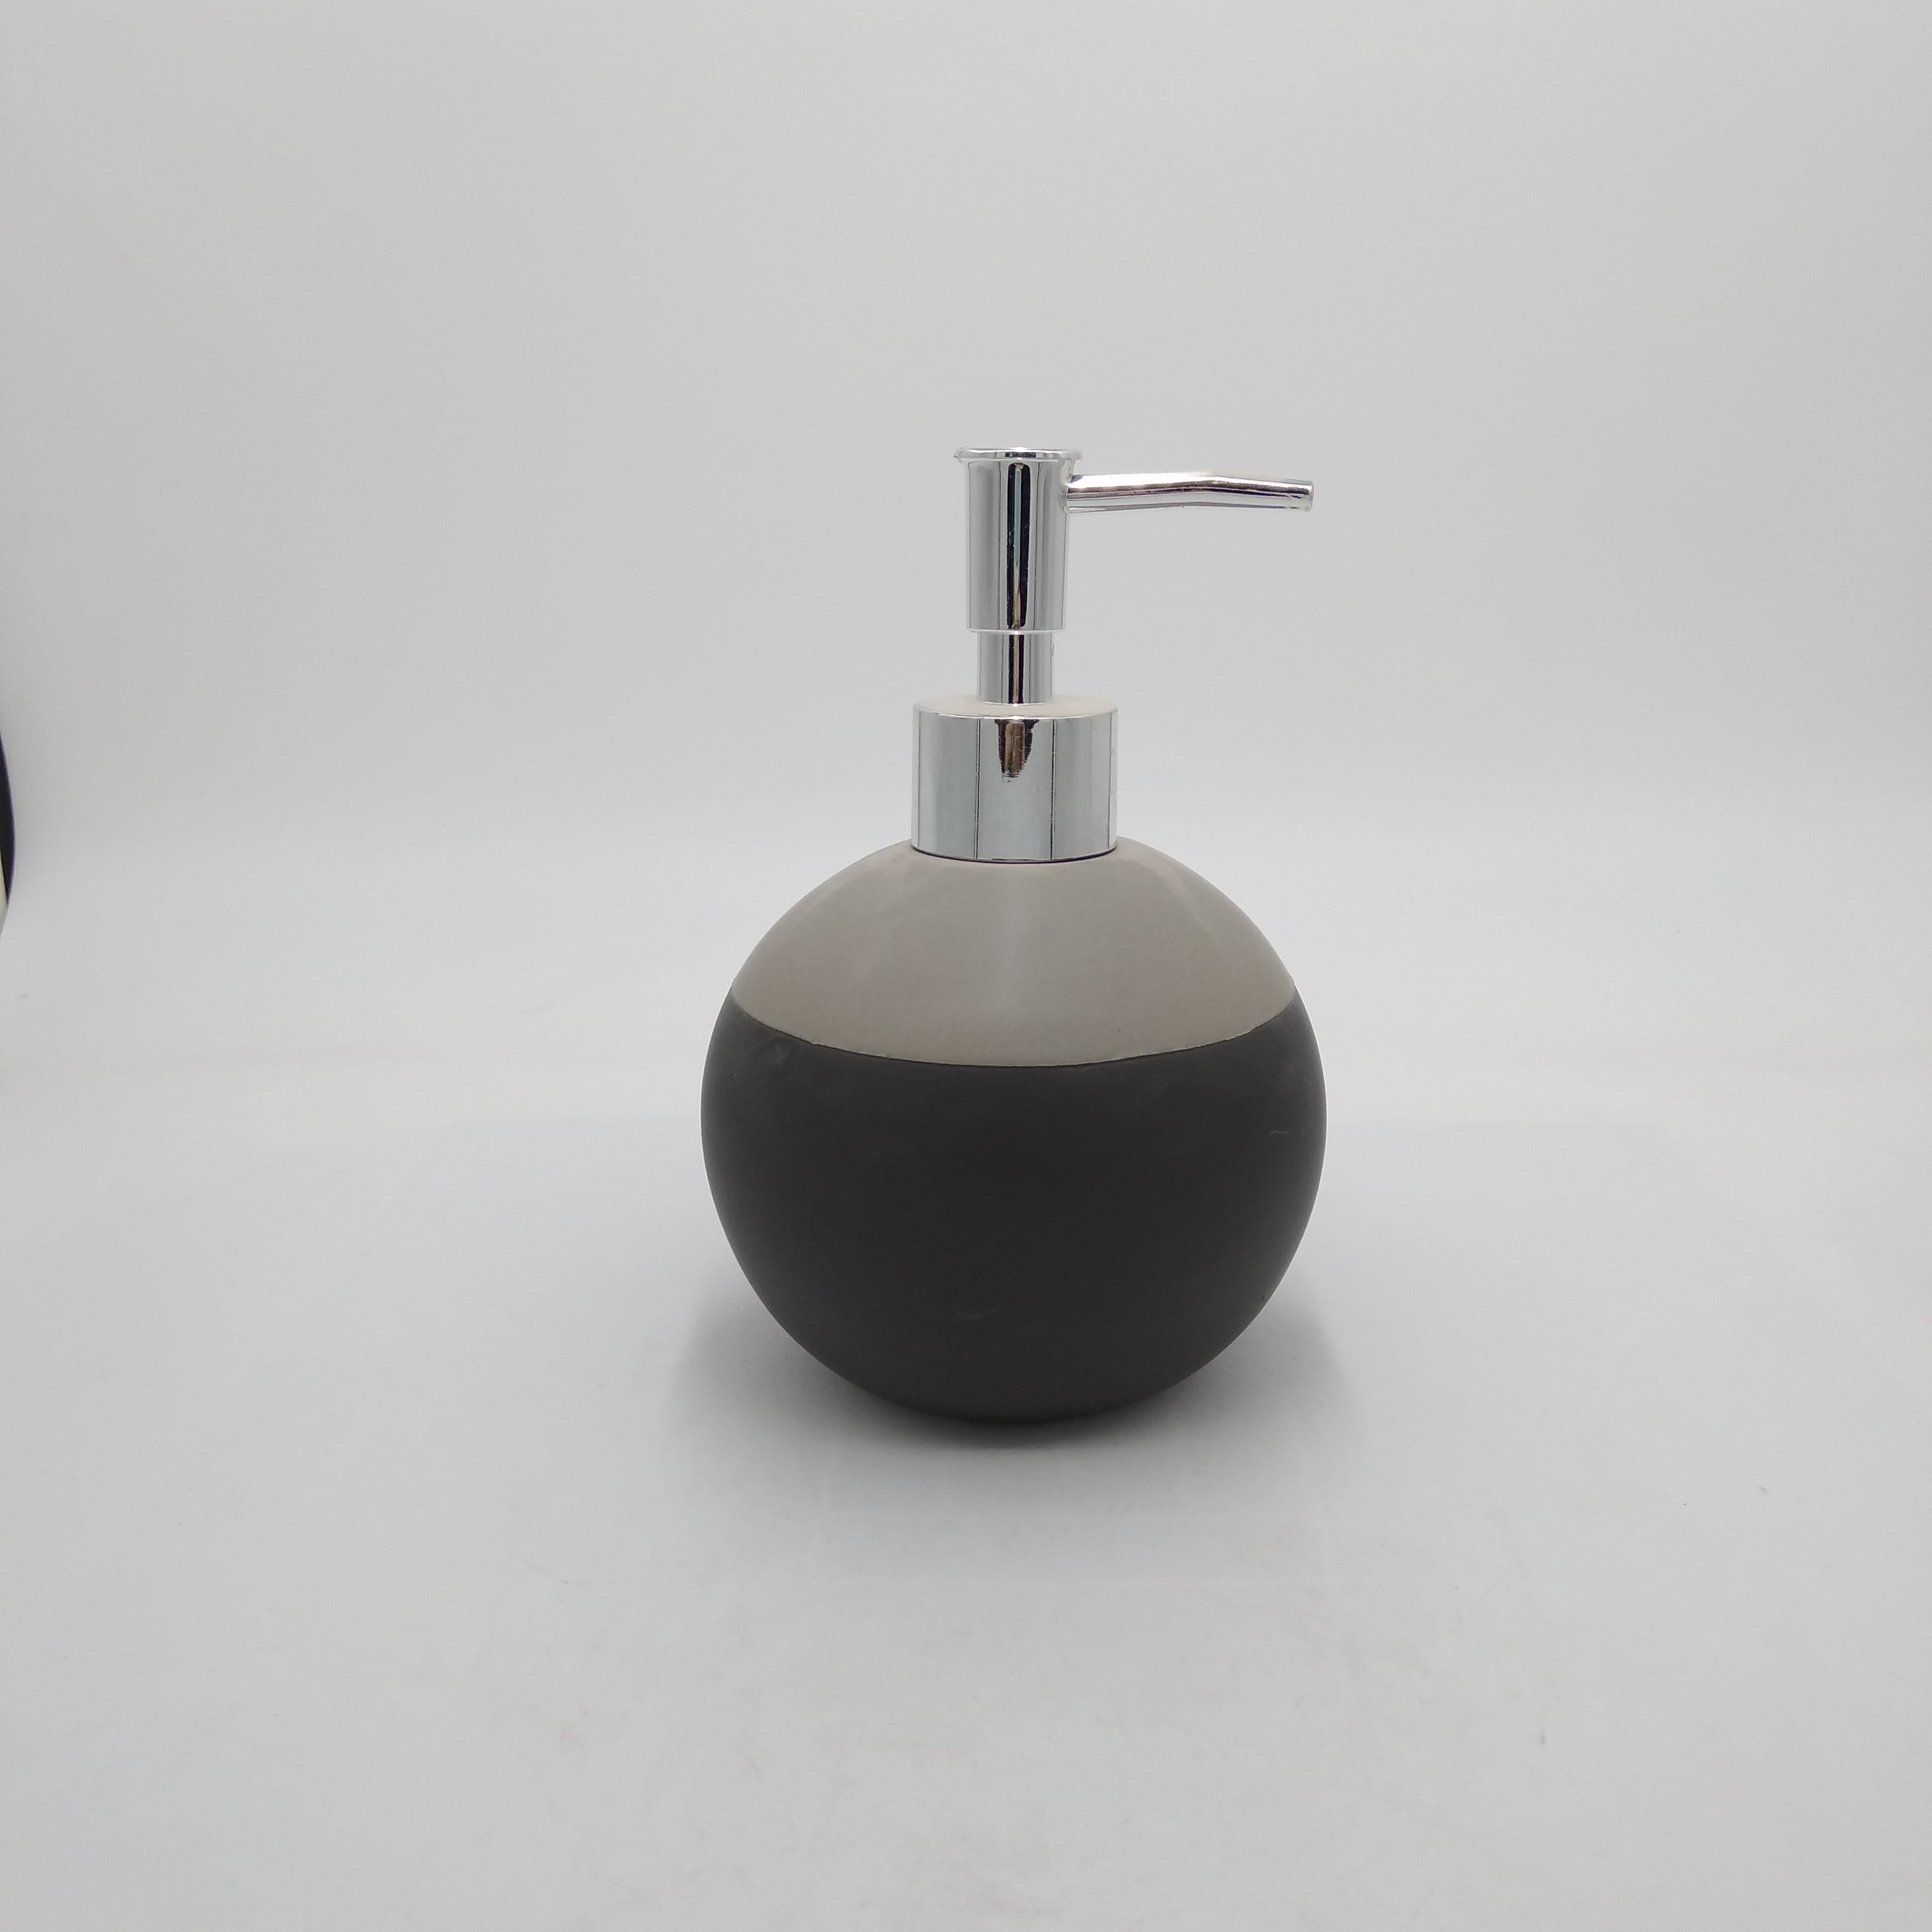 Small Round Refillable Liquid Hand Soap Ceramic Dispenser Pump Bottle, Farmhouse Decor – for Kitchen, Bathroom